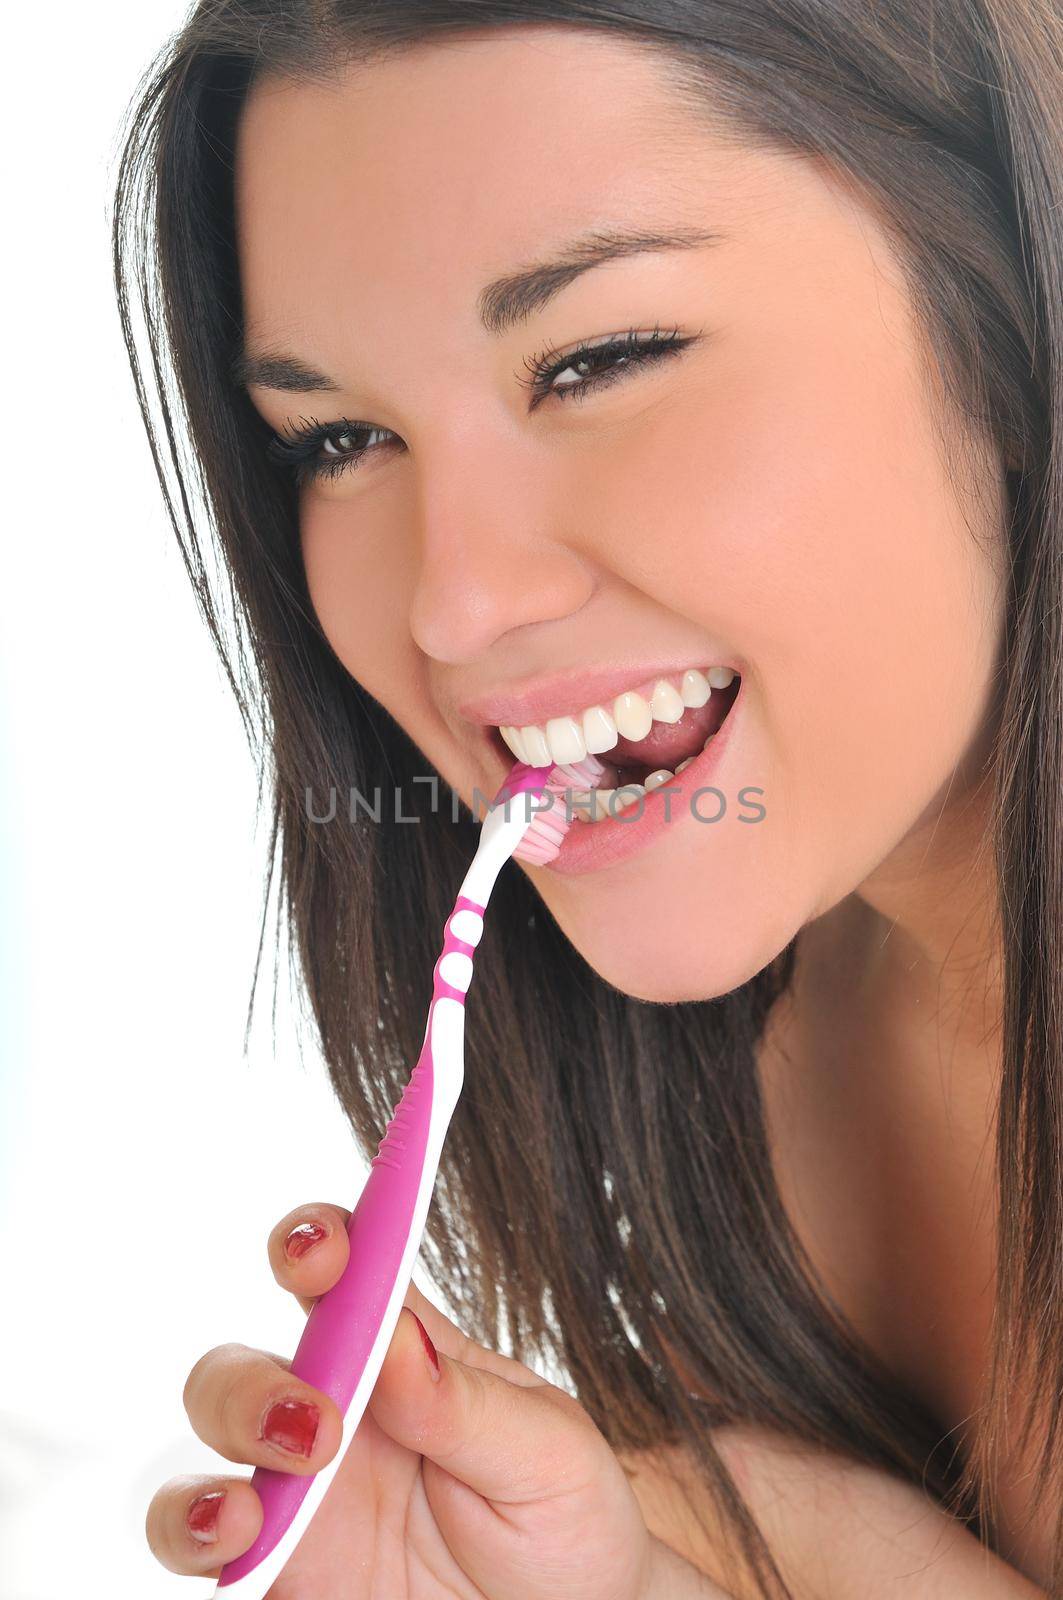 woman tooth brush teeth white smile